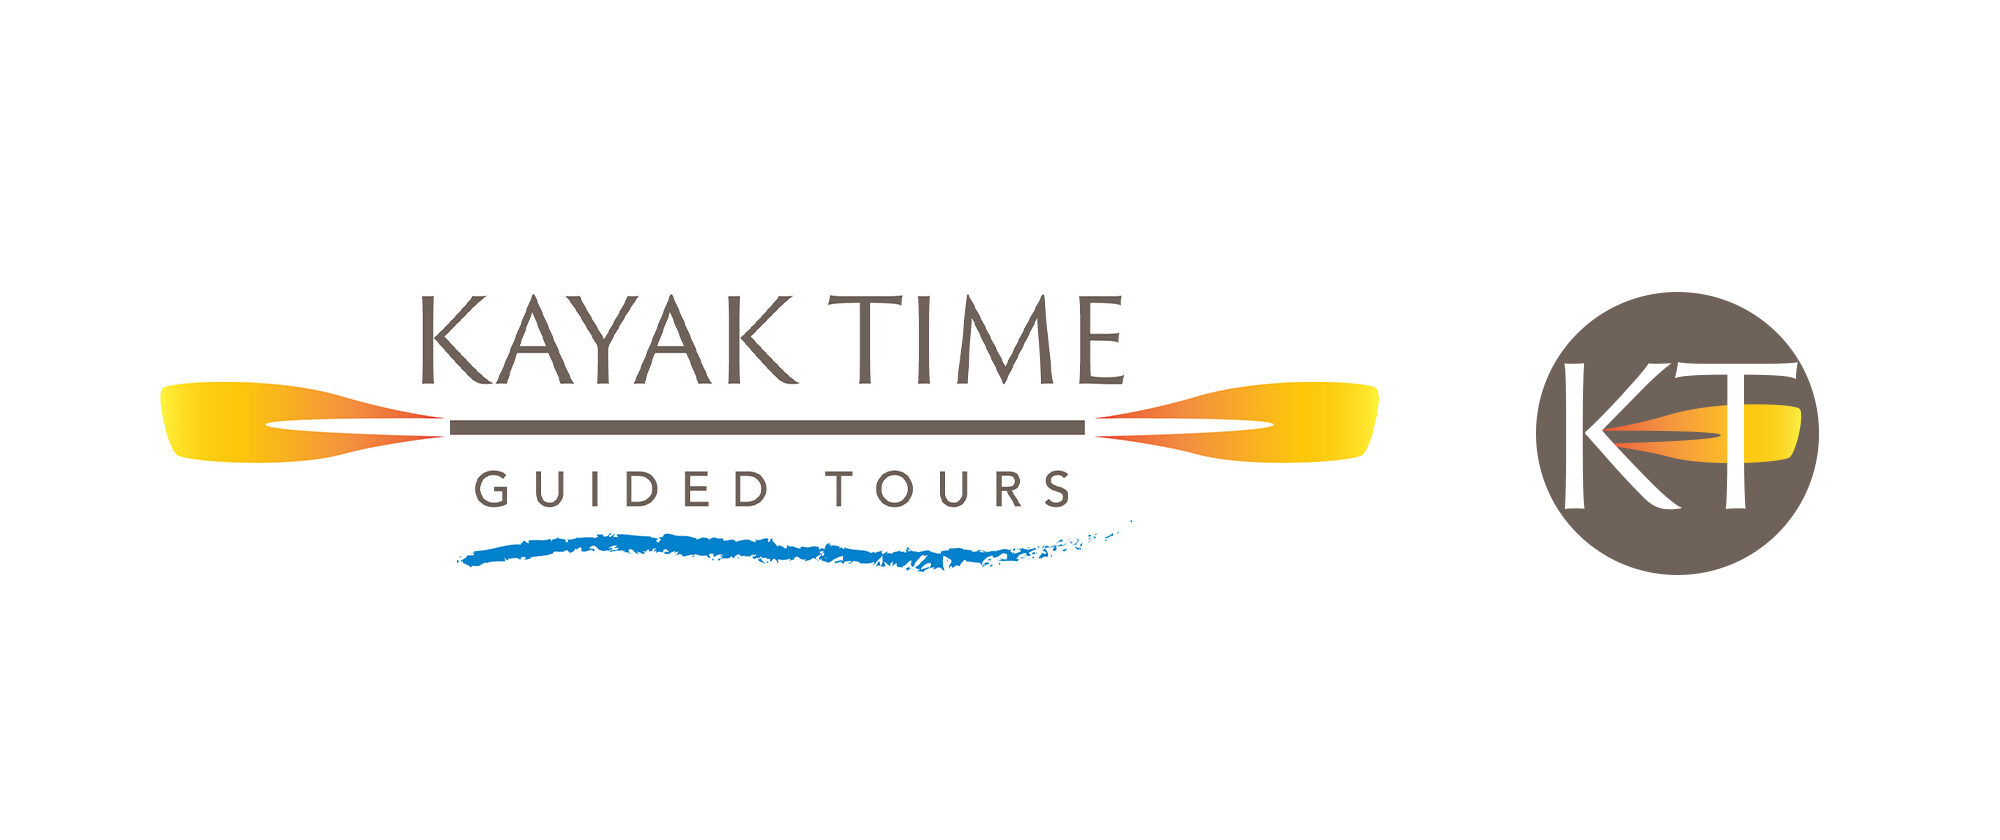 Kayak Time Brand Inhouse Graphic Design 1